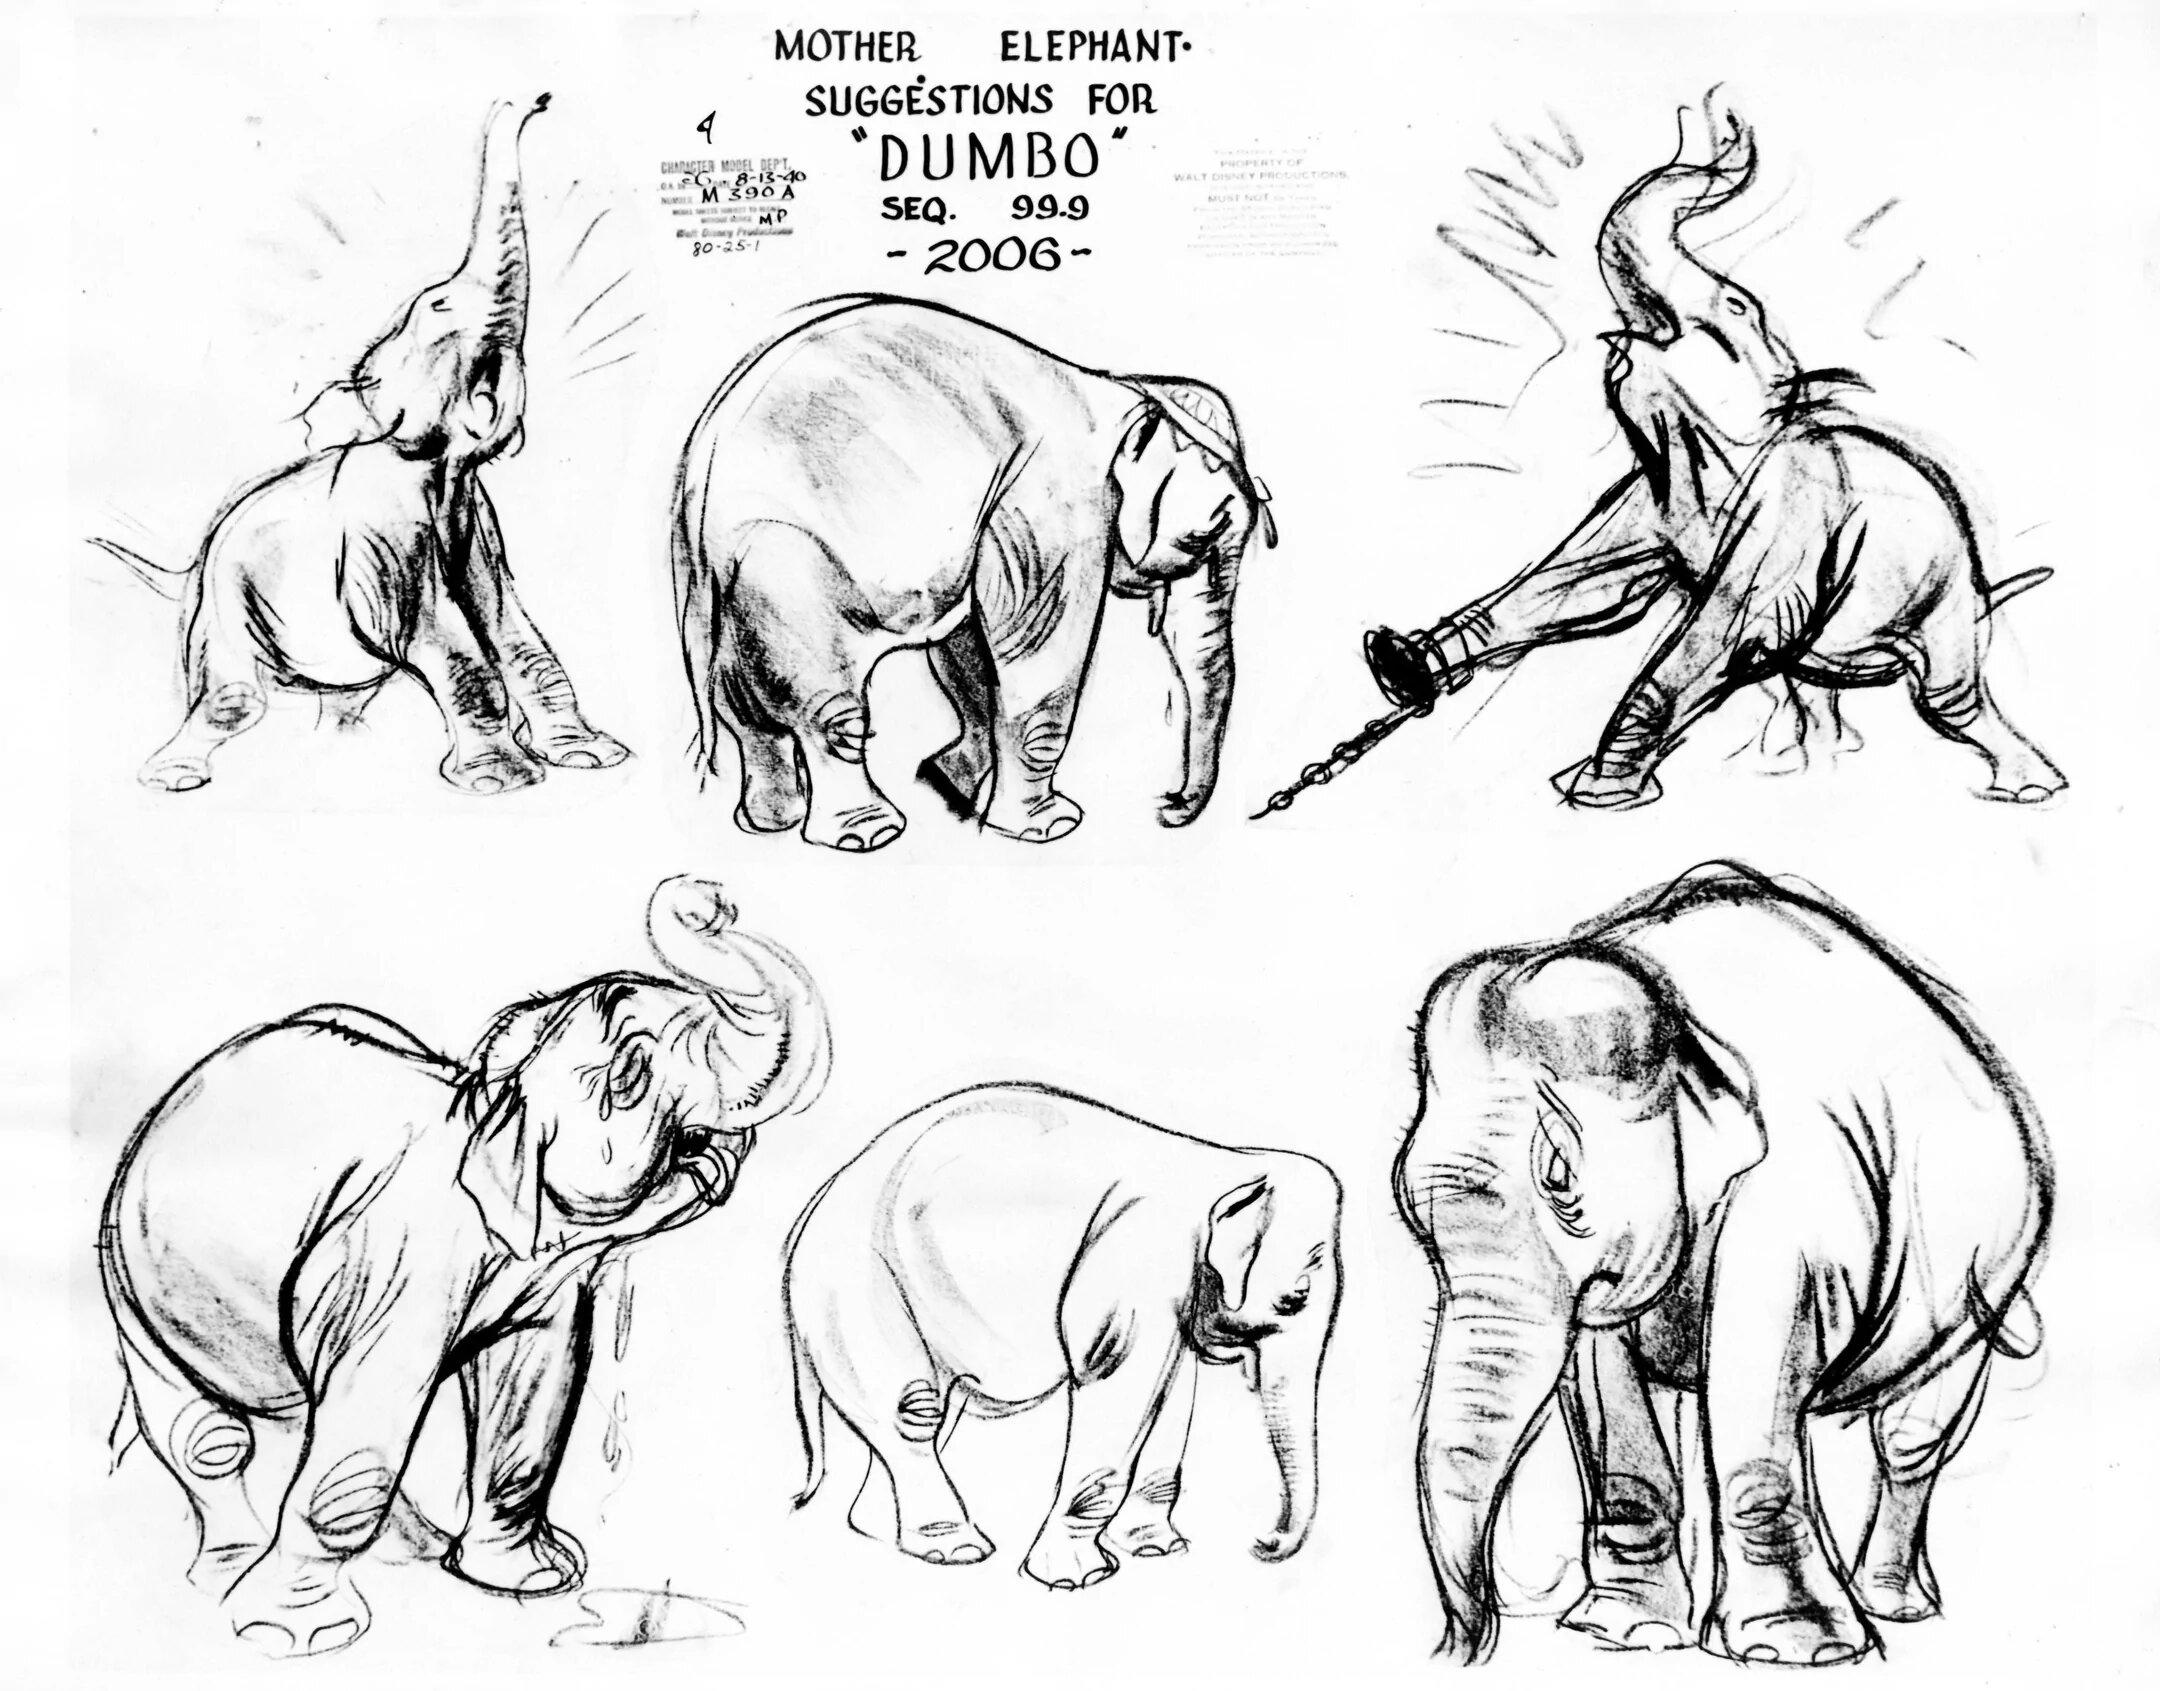 Dumbo Original Production Model Sheet: Mother Elephant Suggestions